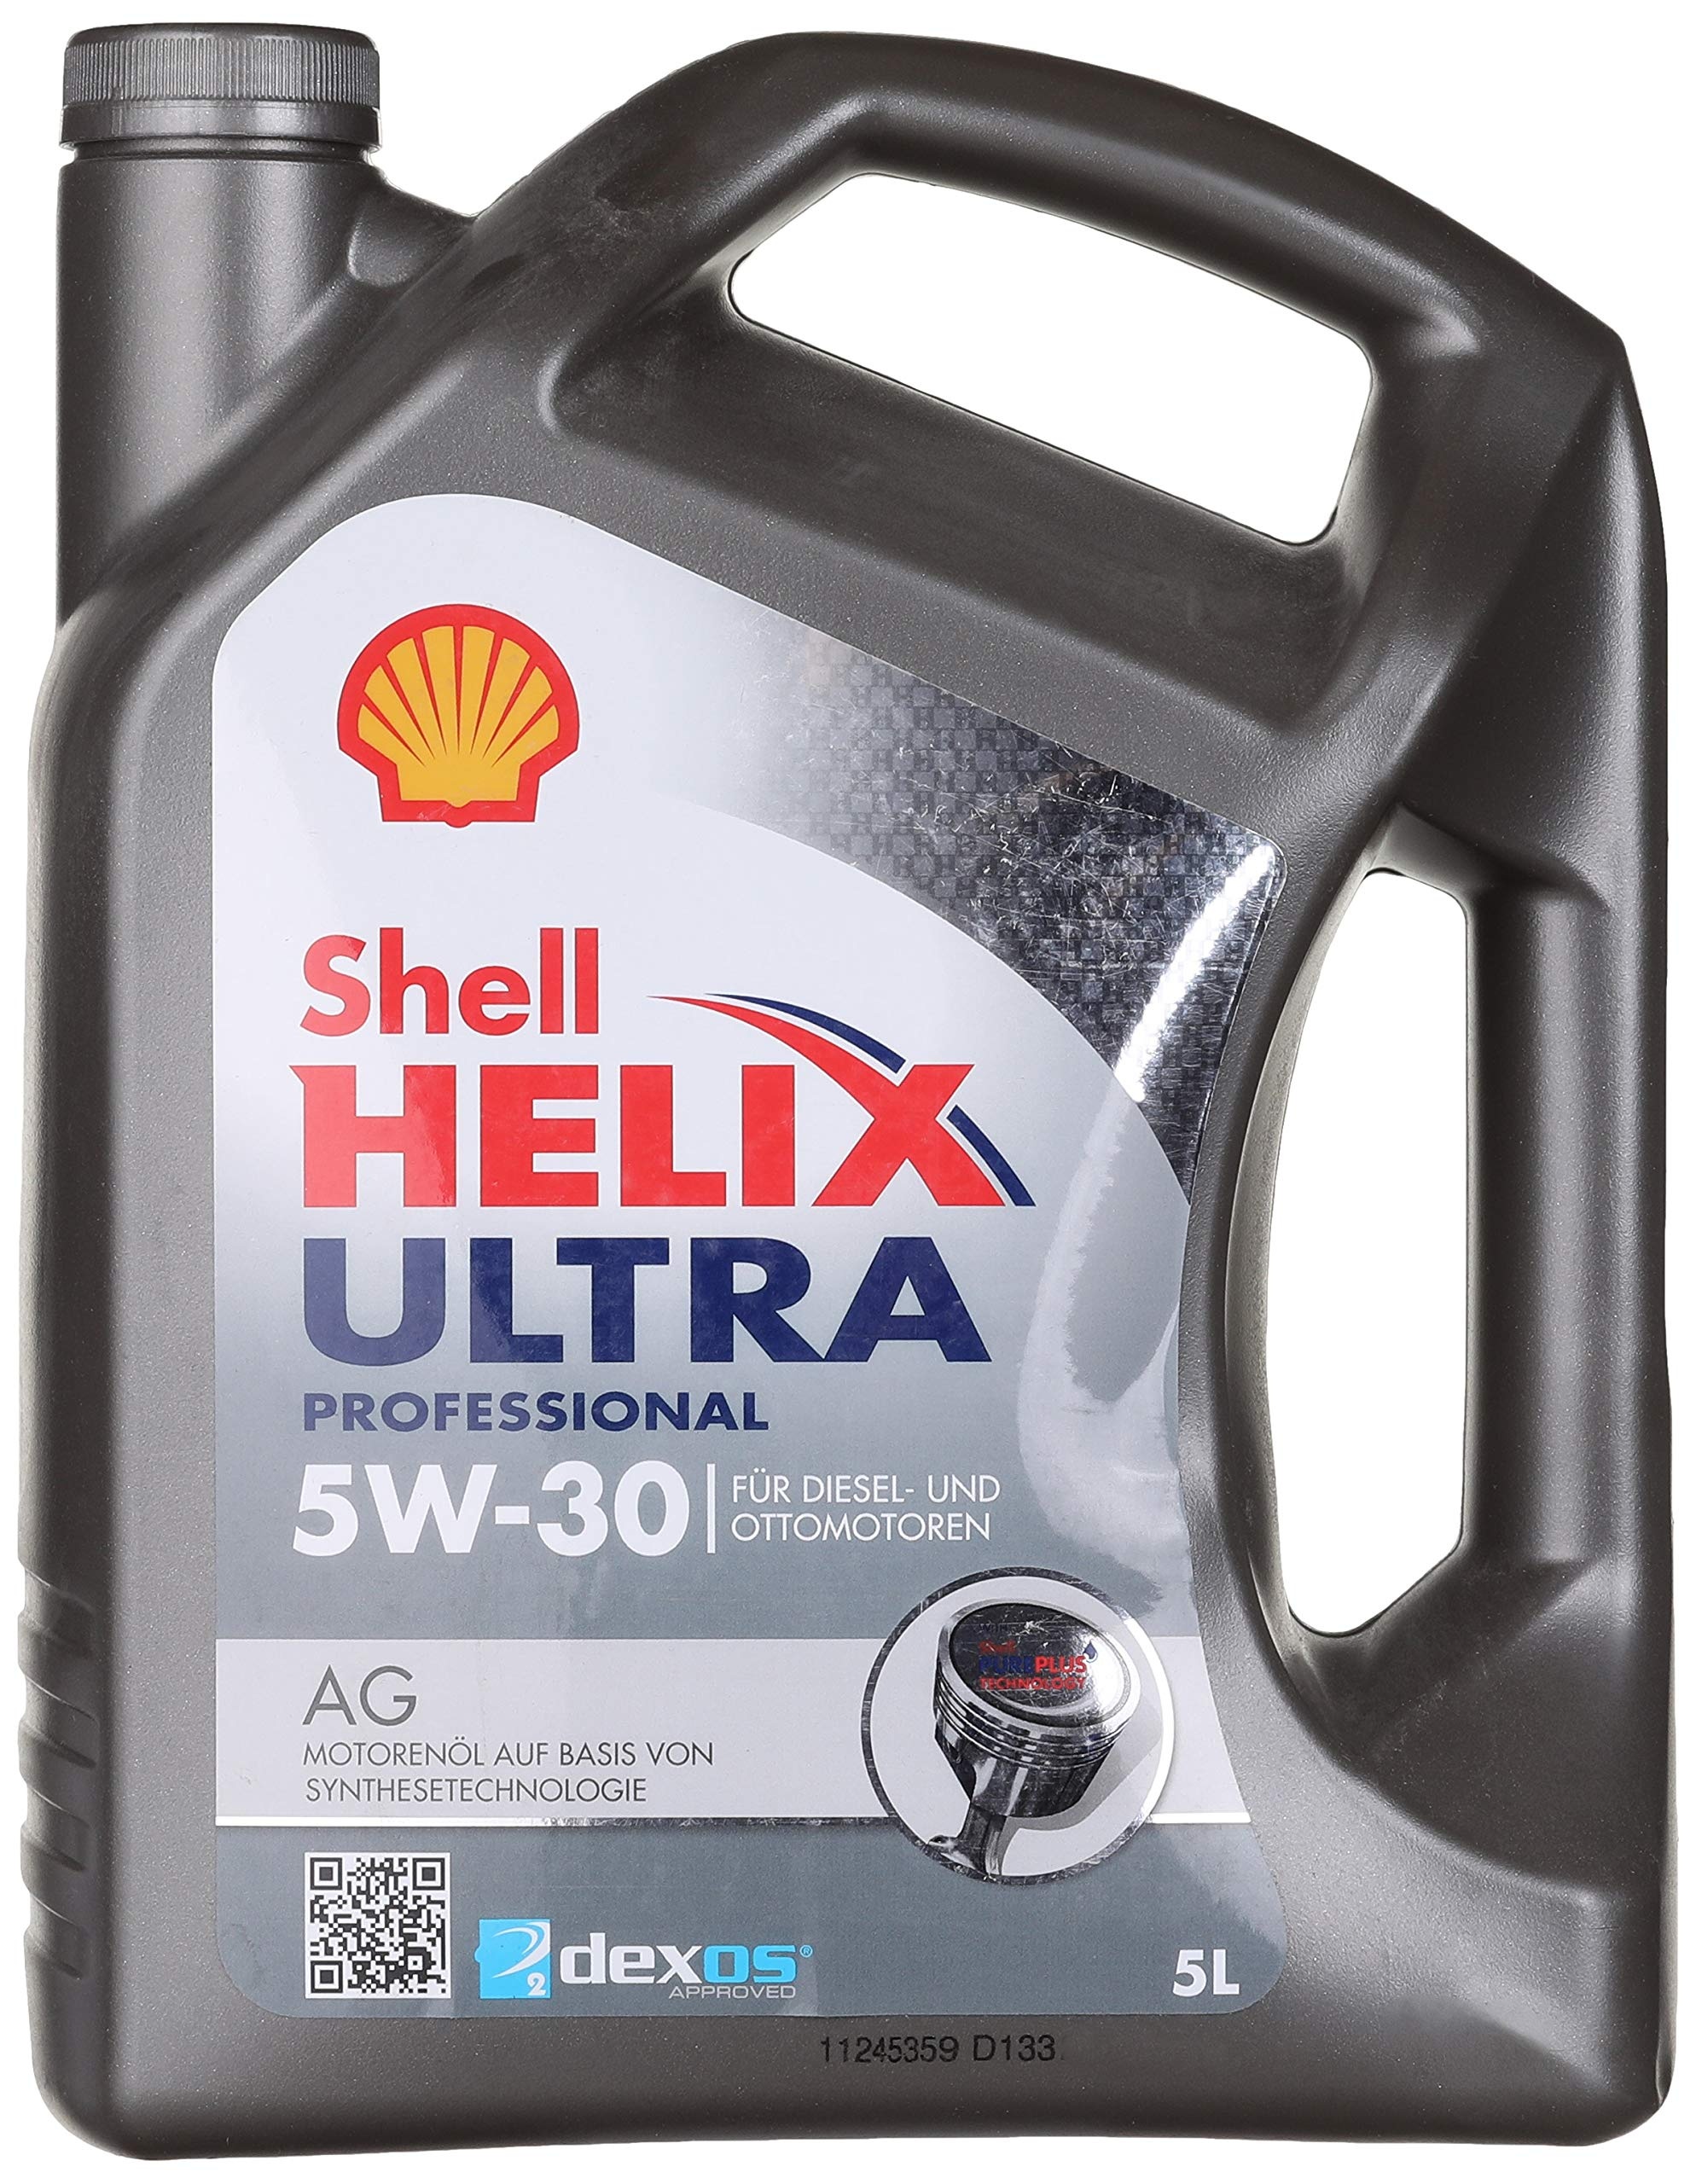 Bild Helix Ultra AG 5W-30 5 Liter